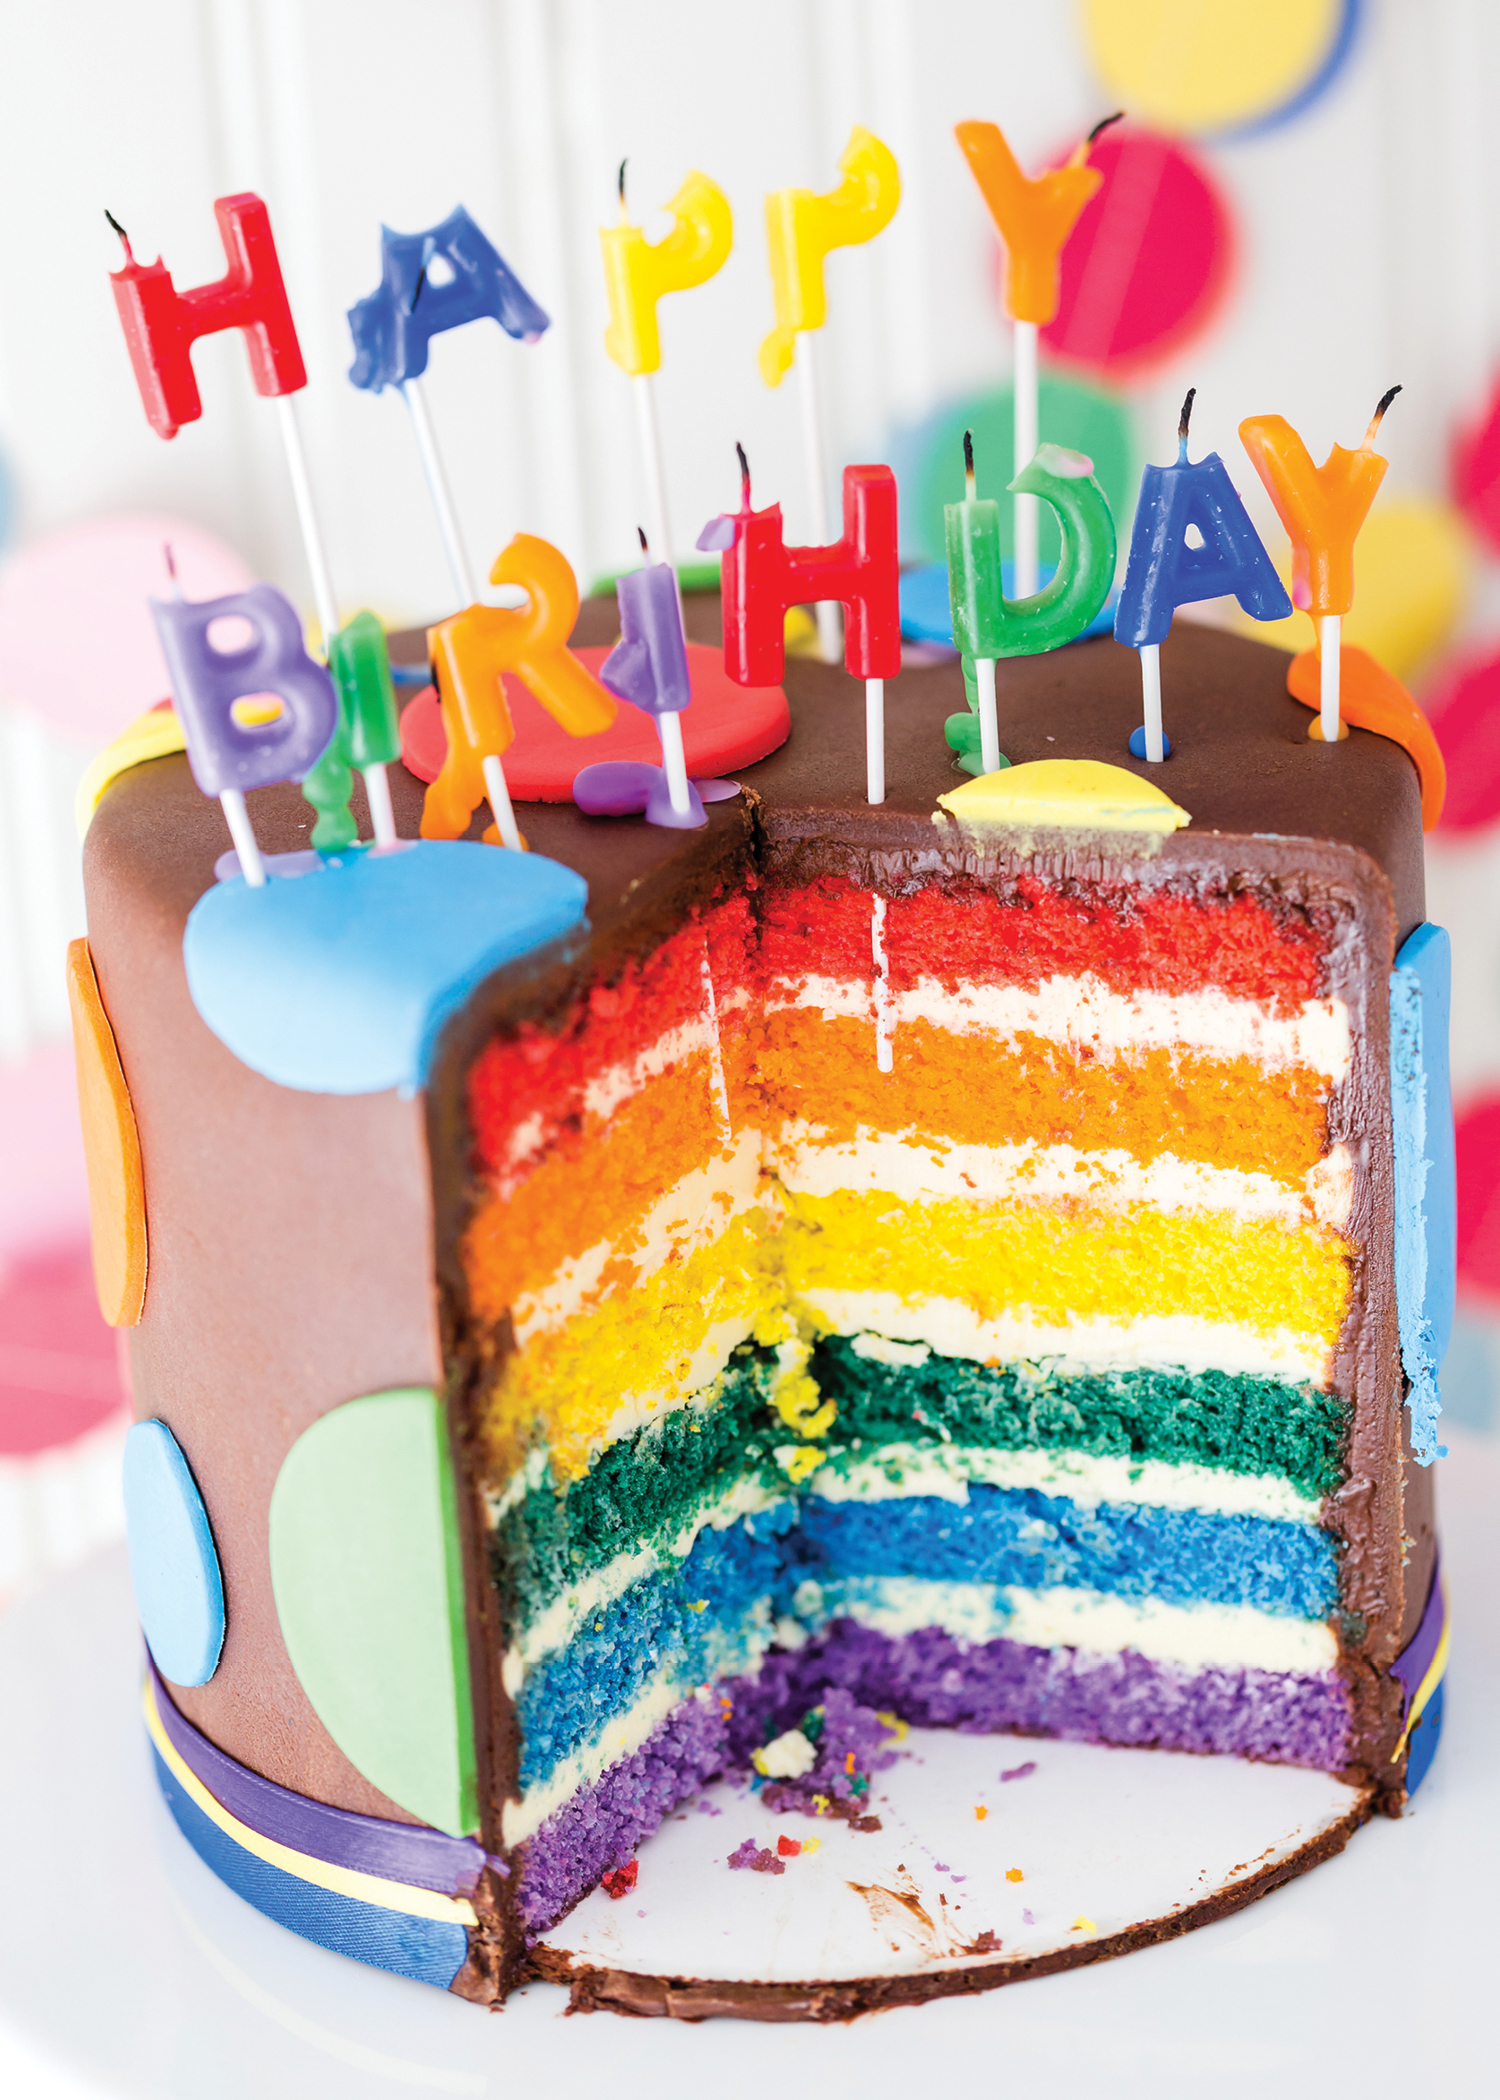 Singing Birthday Cake Ecard - eyedesignla